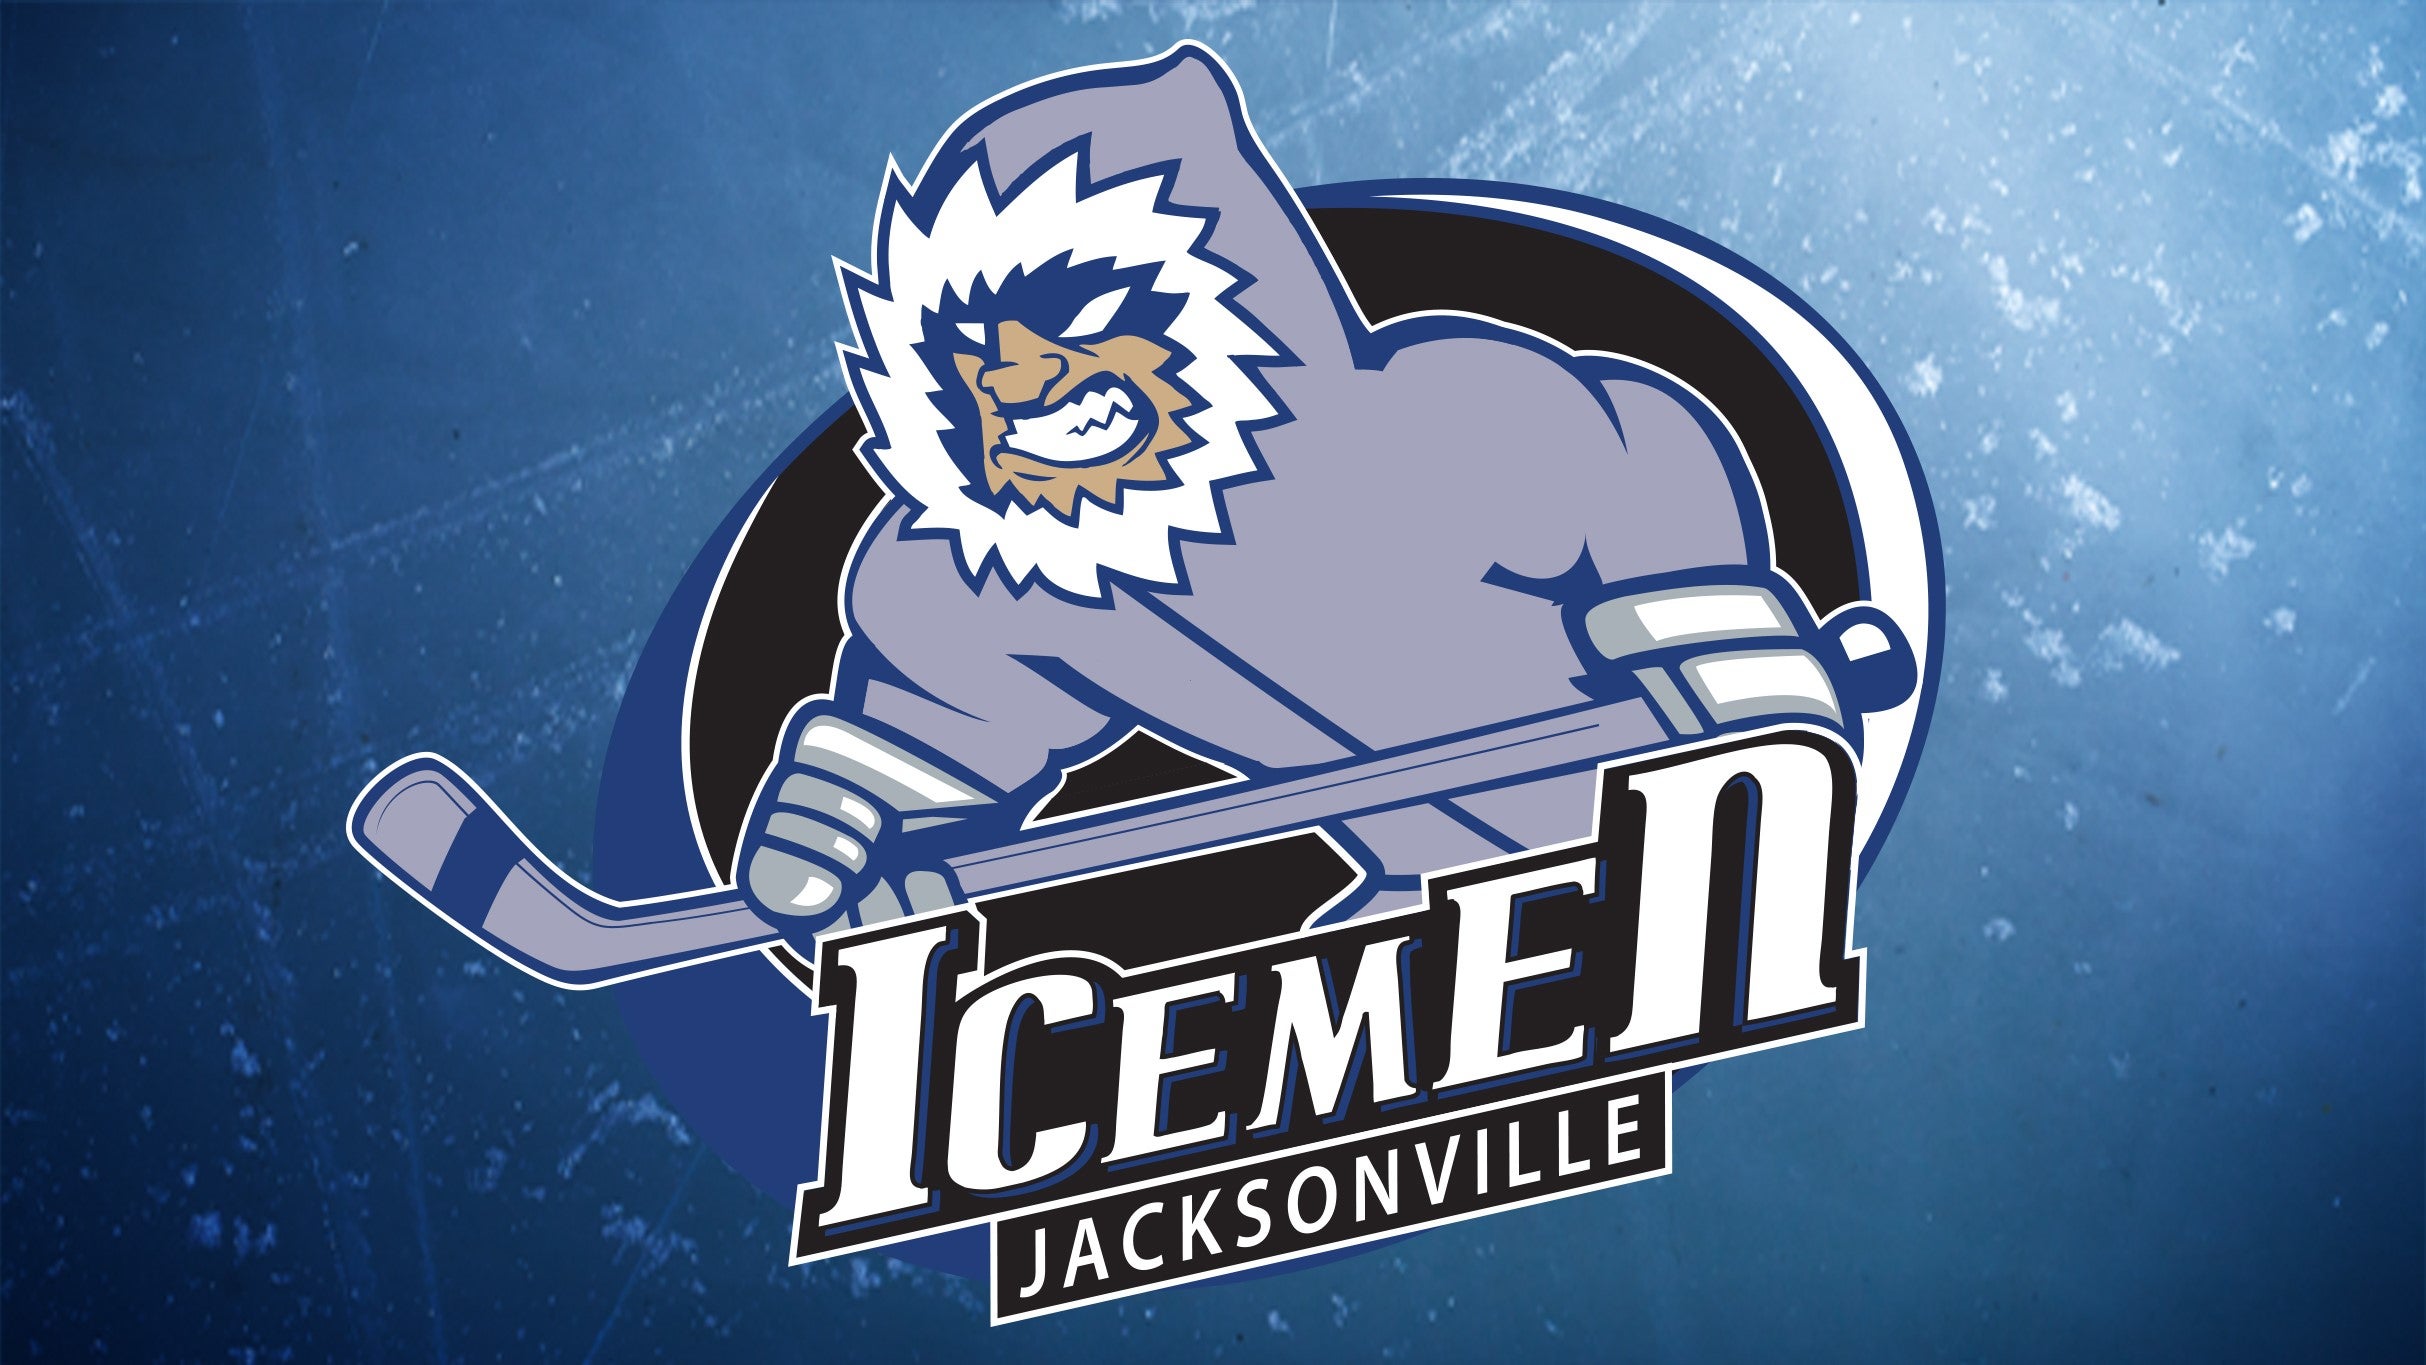 Jacksonville Icemen v TBD Opponent Home Playoffs Round 2 Game 1 at VyStar Veterans Memorial Arena – Jacksonville, FL